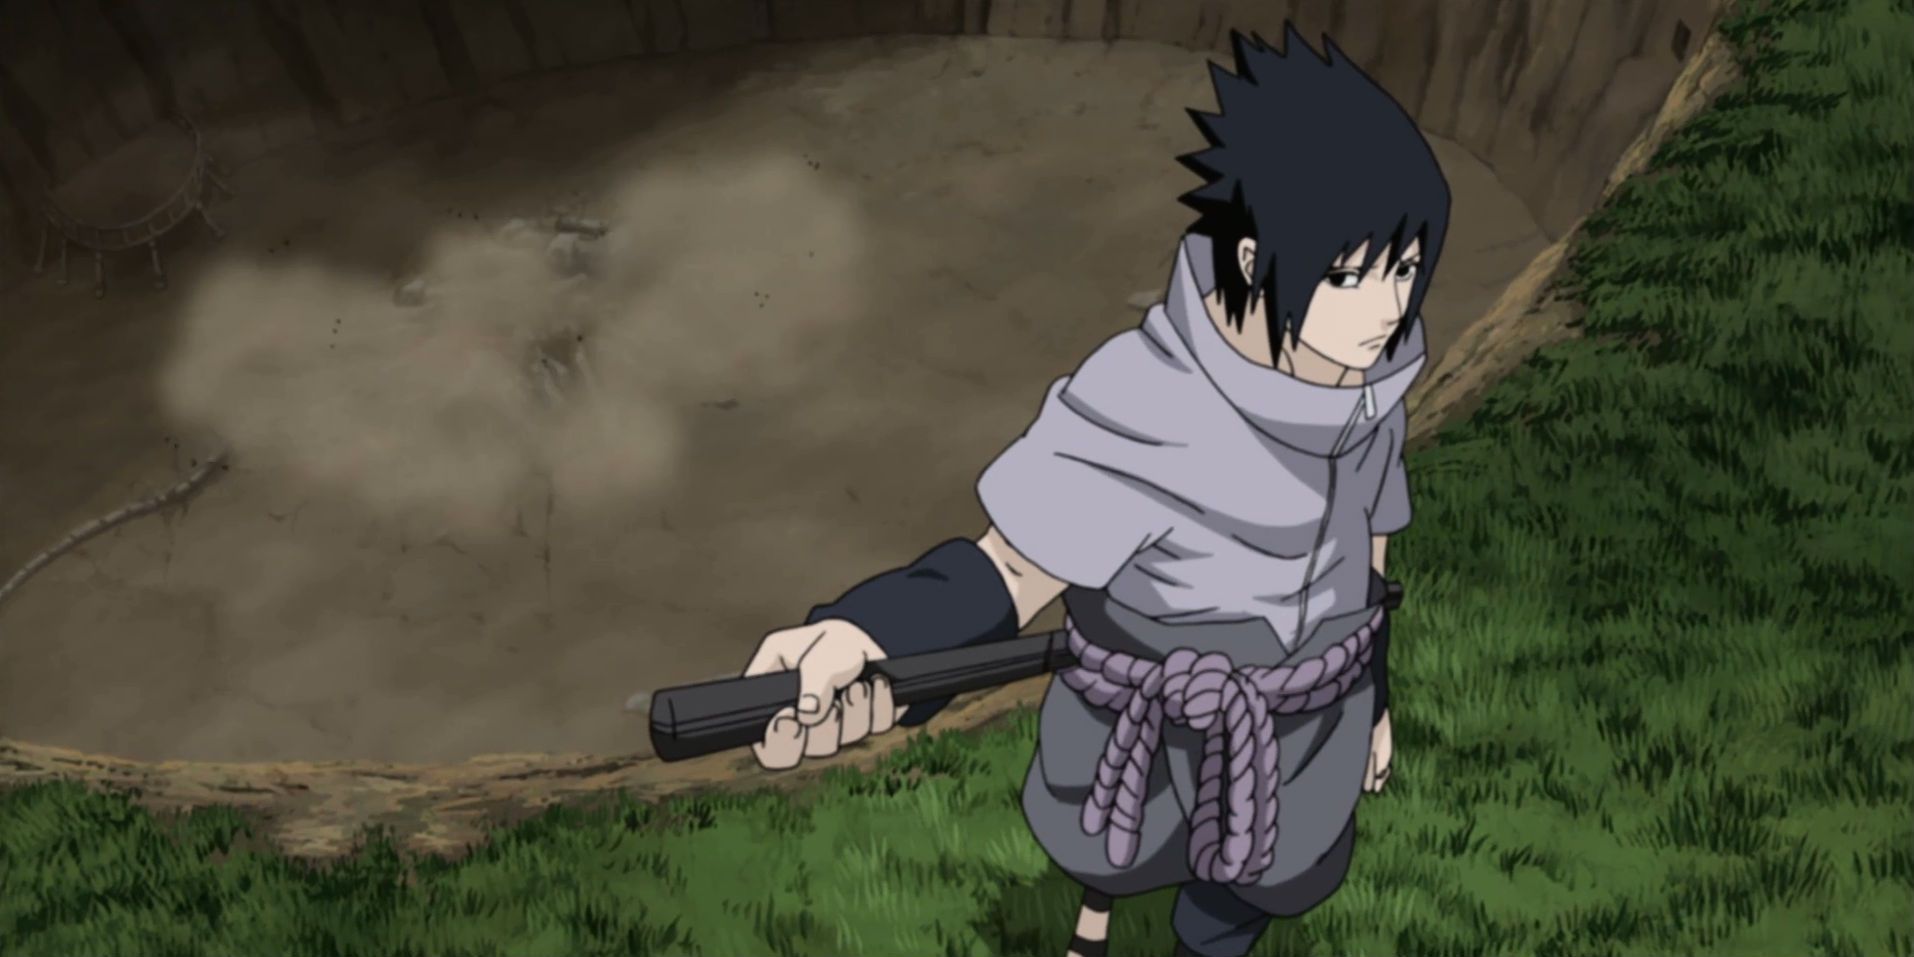 Sasuke Uchiha prepares for a fight in Naruto Shippuden